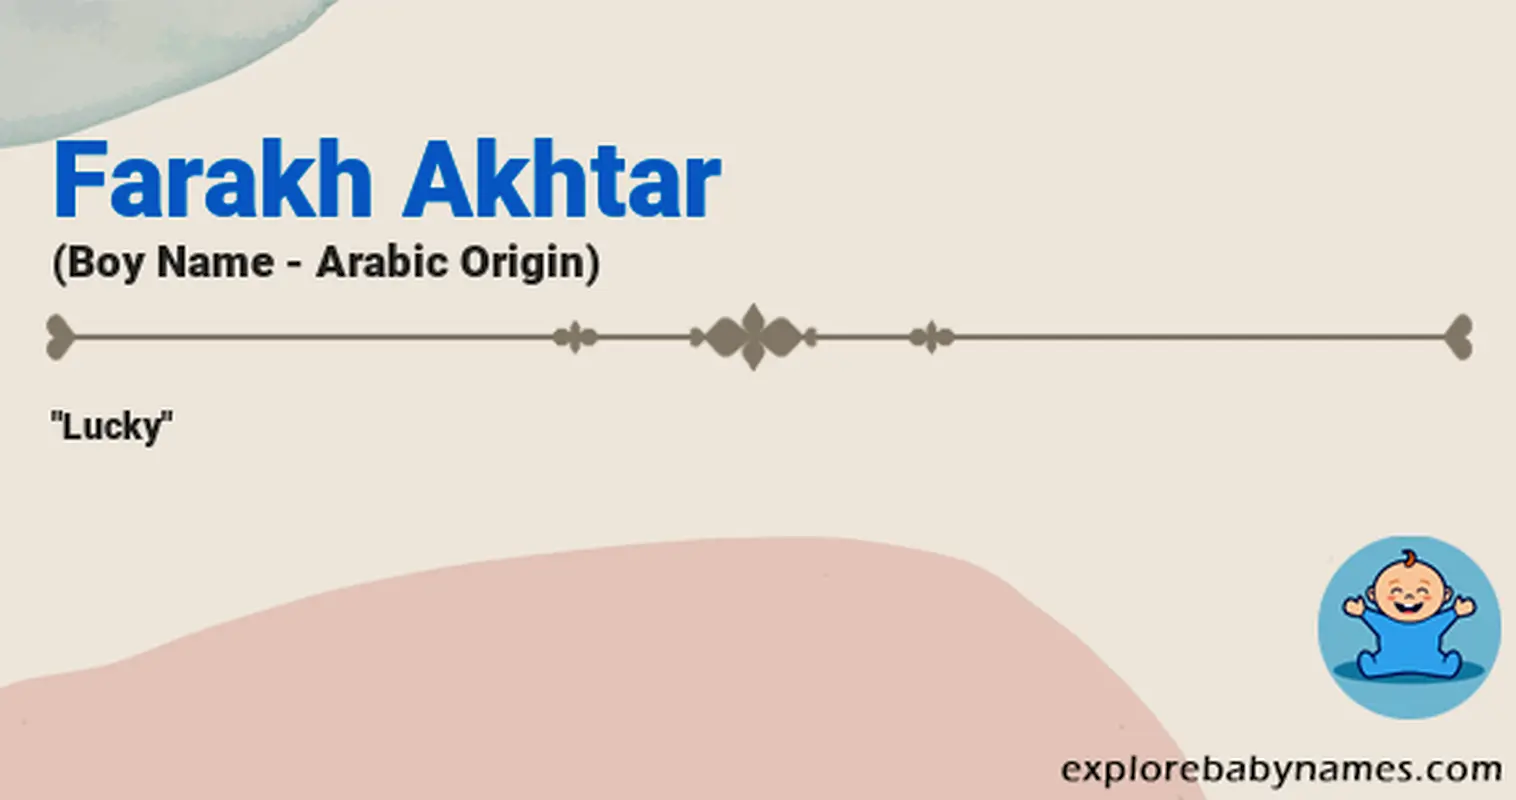 Meaning of Farakh Akhtar